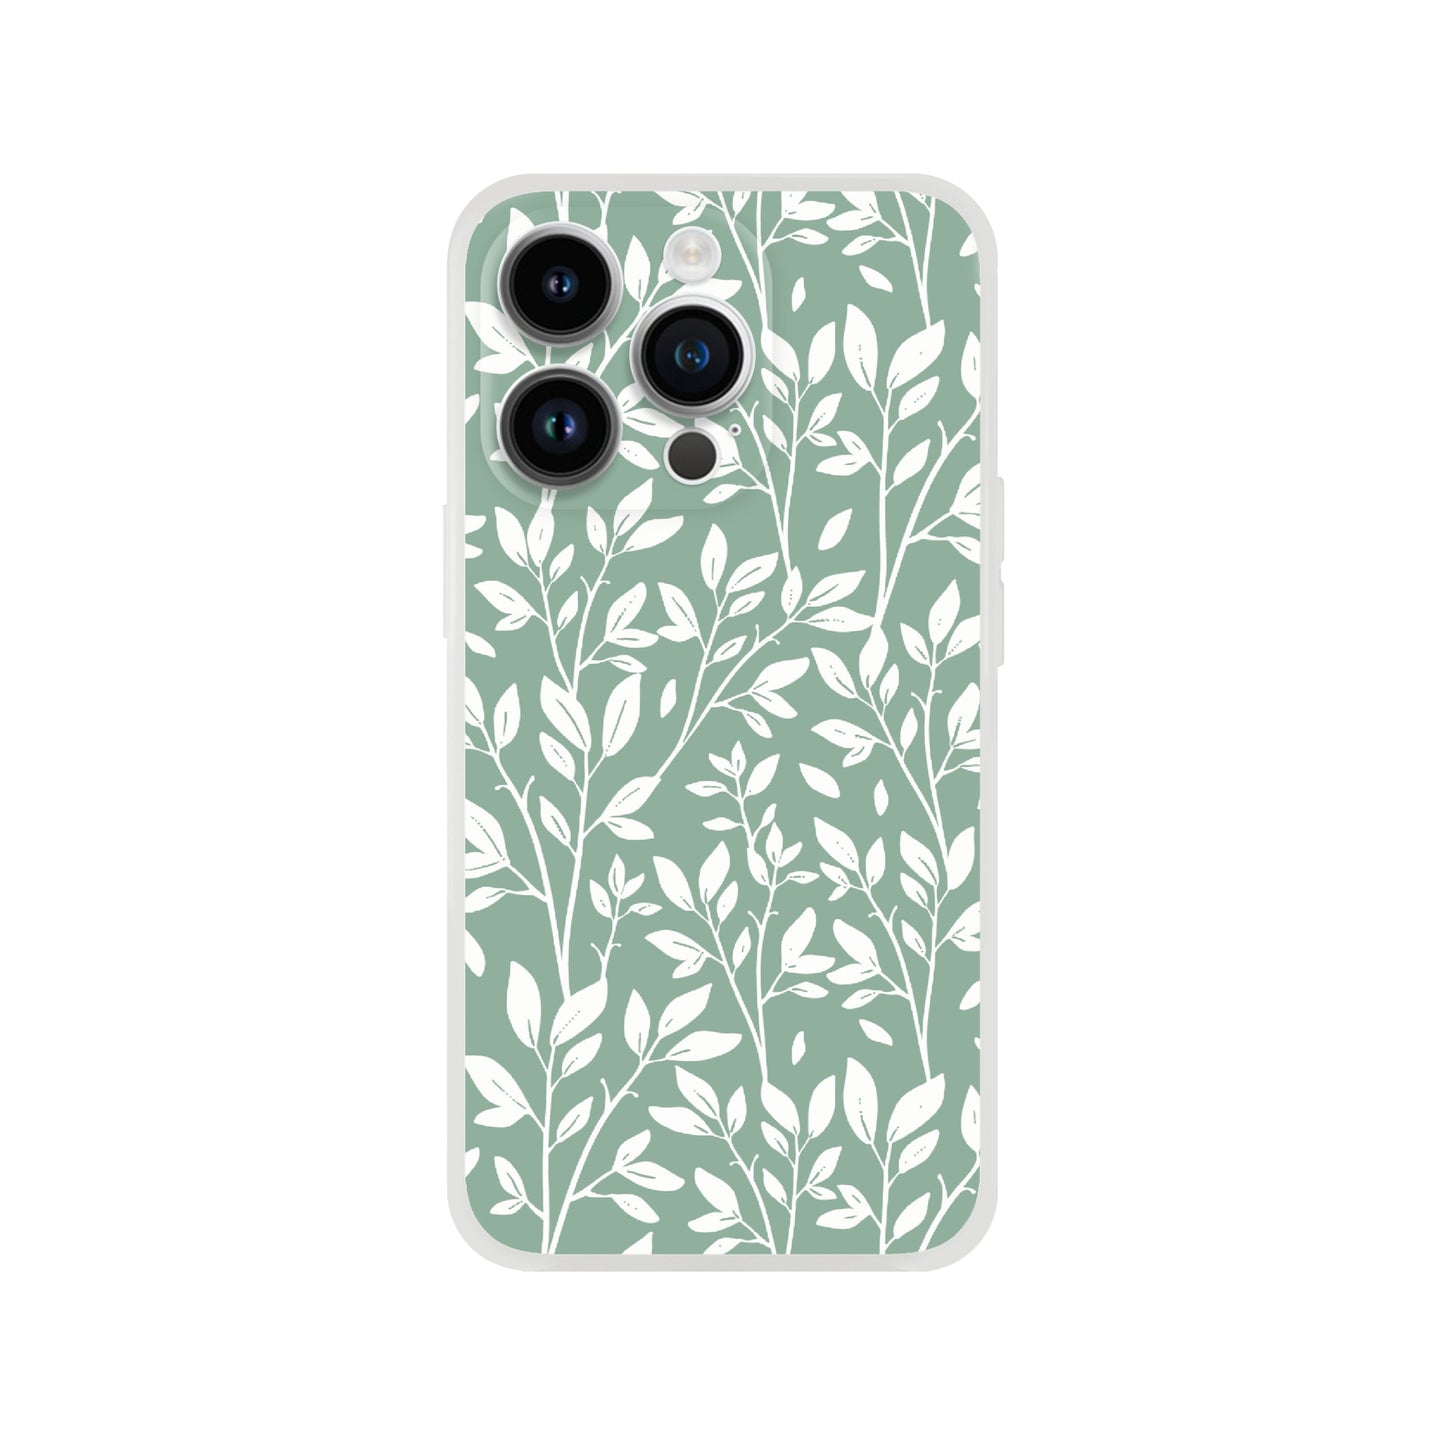 Restful Green Botanical Leaves Phone Case - Stylish & Protective